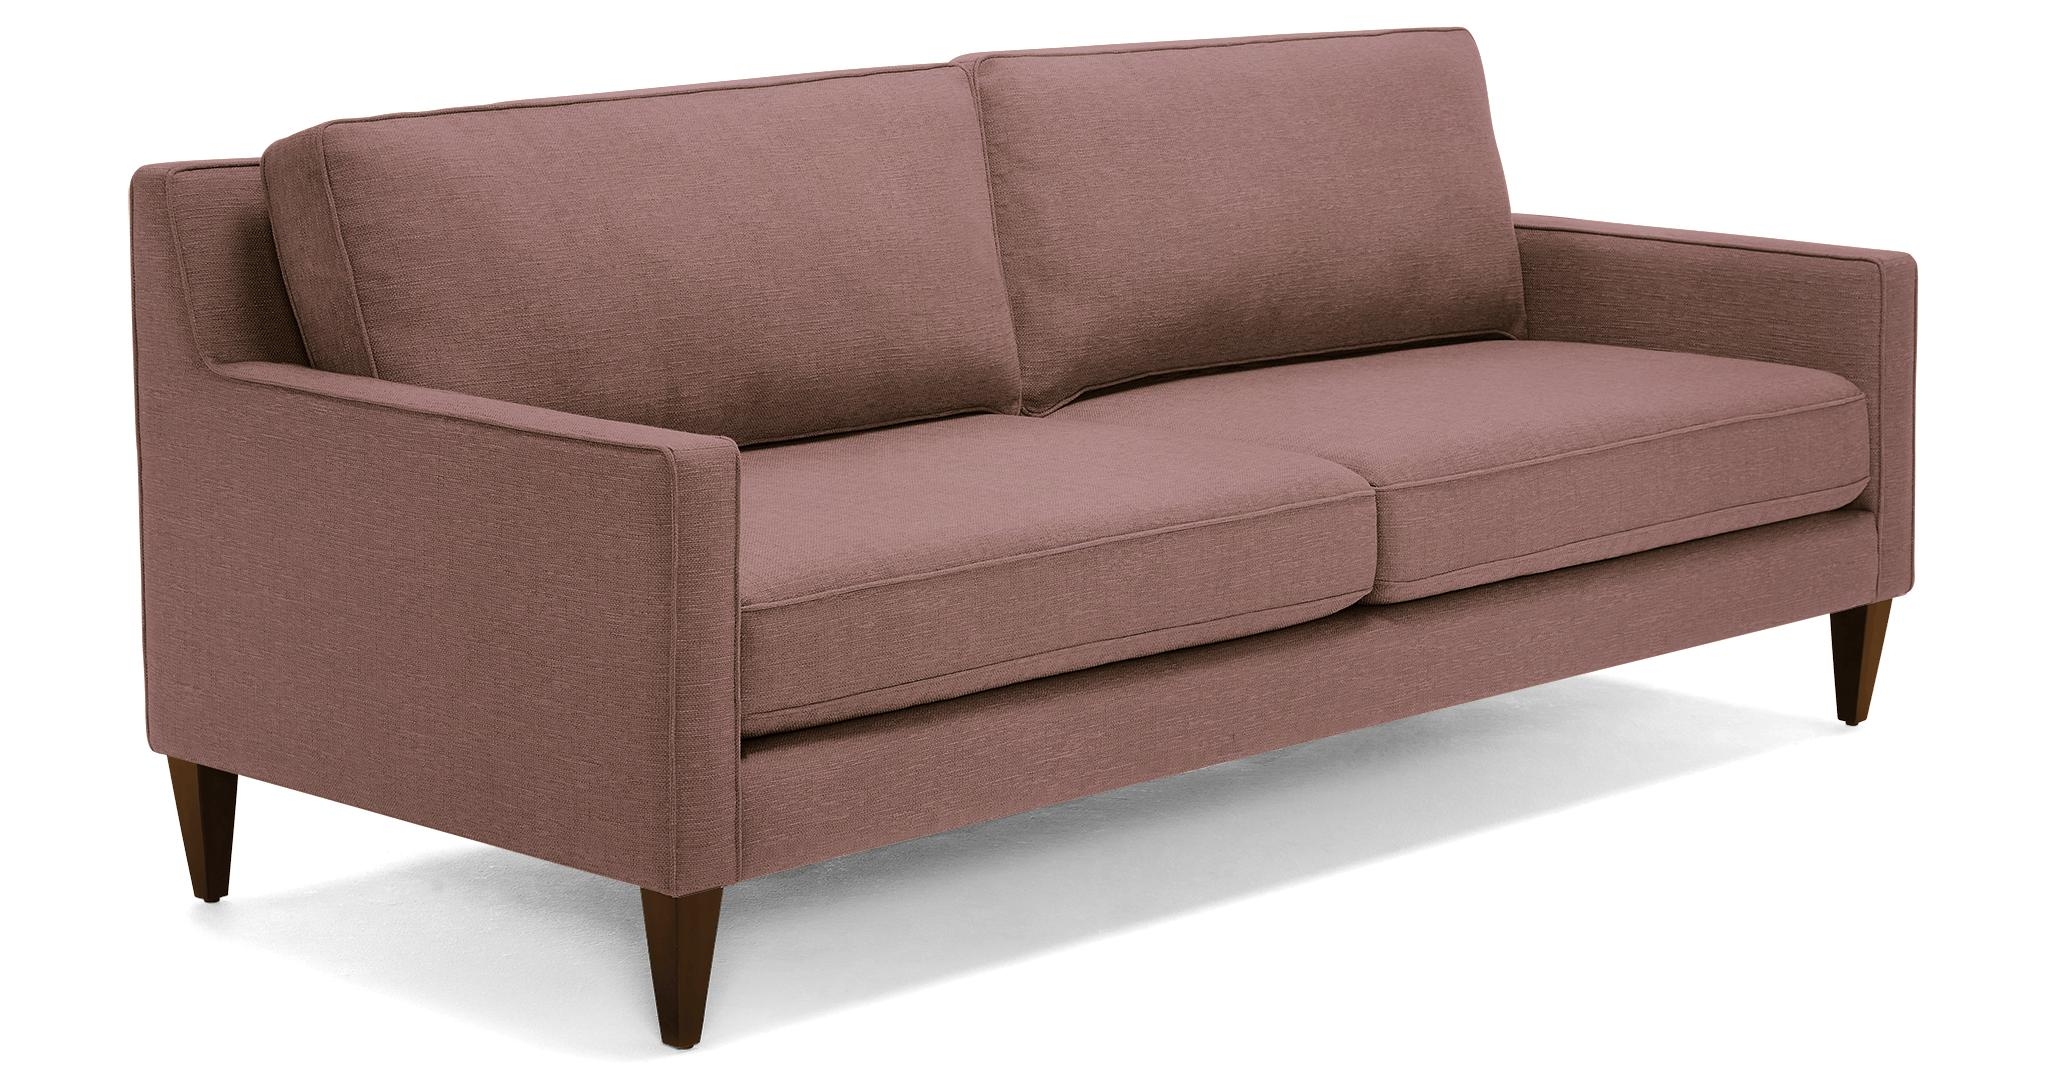 Purple Levi Mid Century Modern Sofa - Marin Mauve - Mocha - Image 1